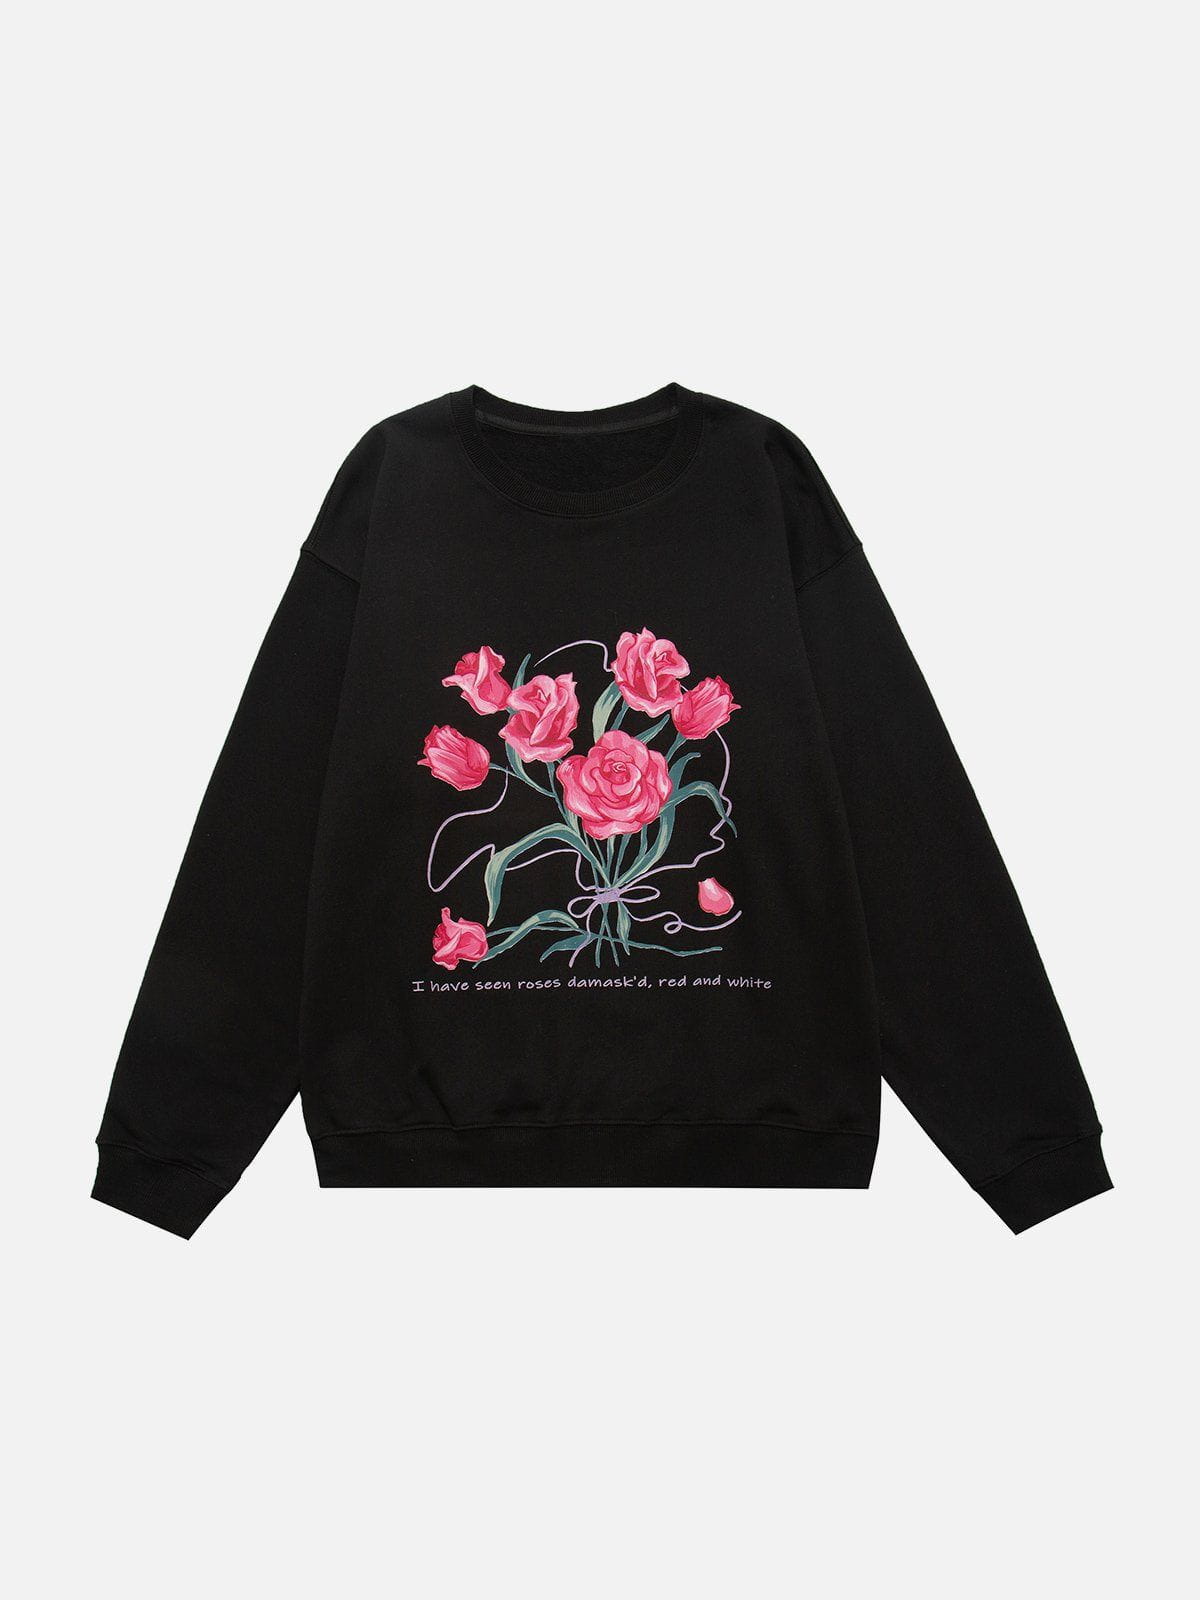 LUXENFY™ - Romantic Rose Print Sweatshirt luxenfy.com